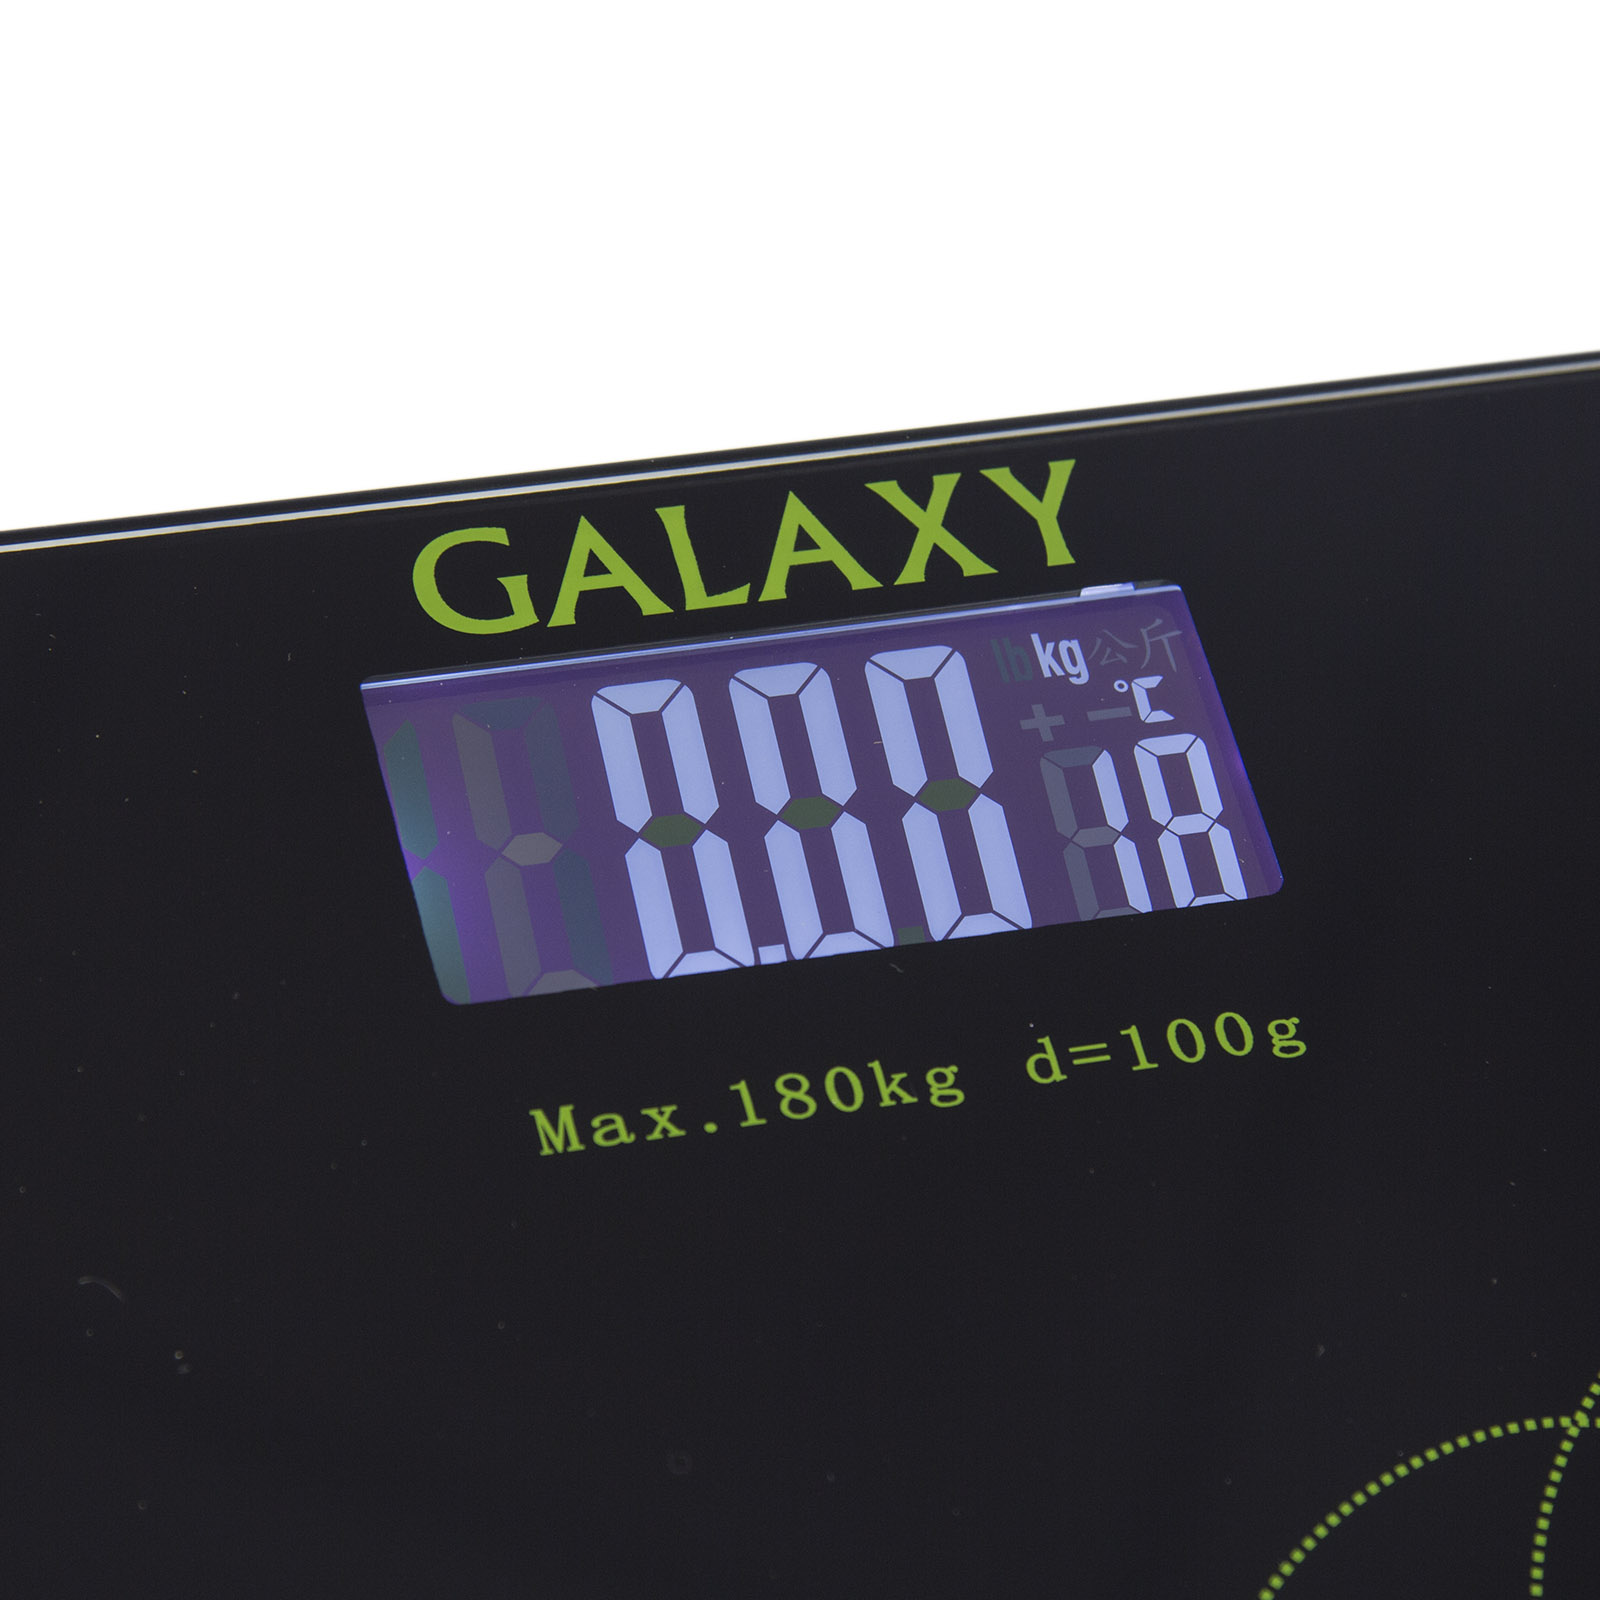   Galaxy Line GL4802